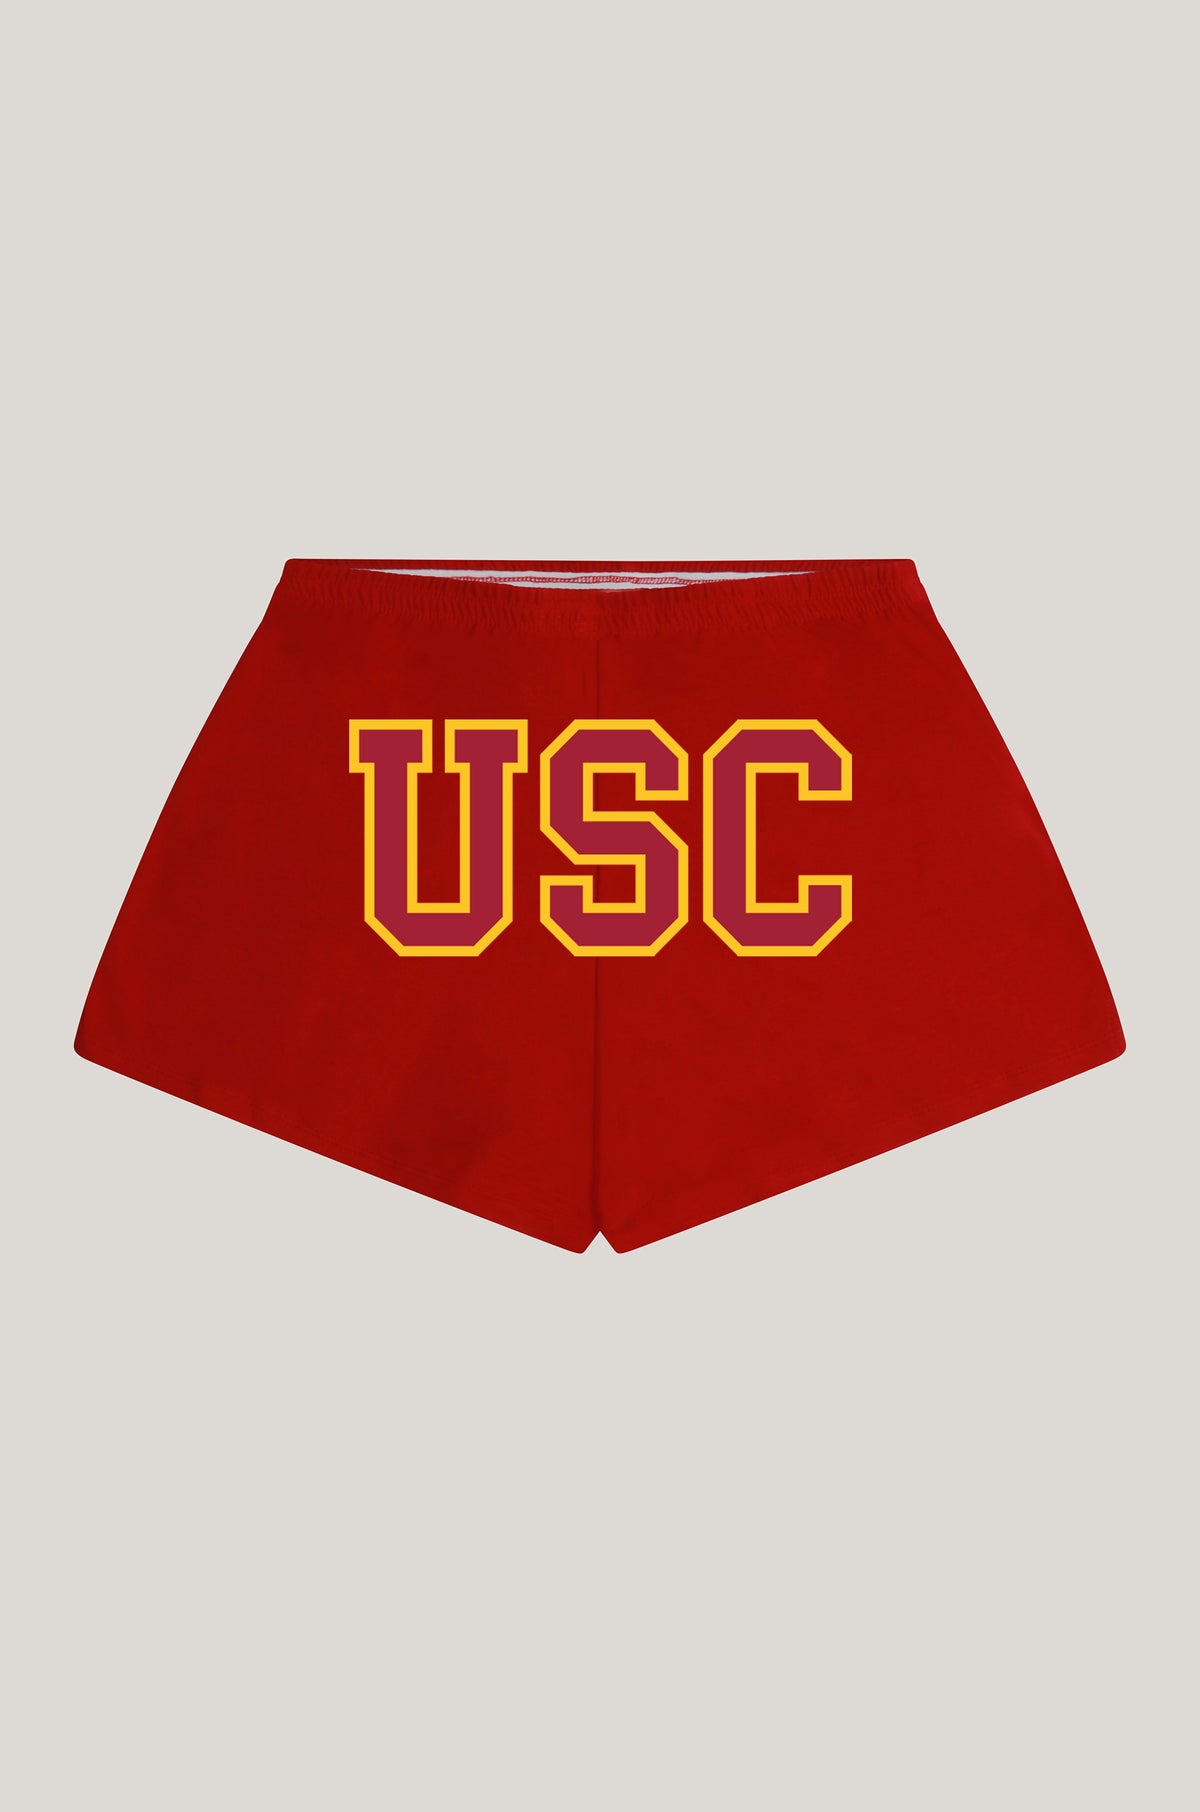 USC P.E. Shorts